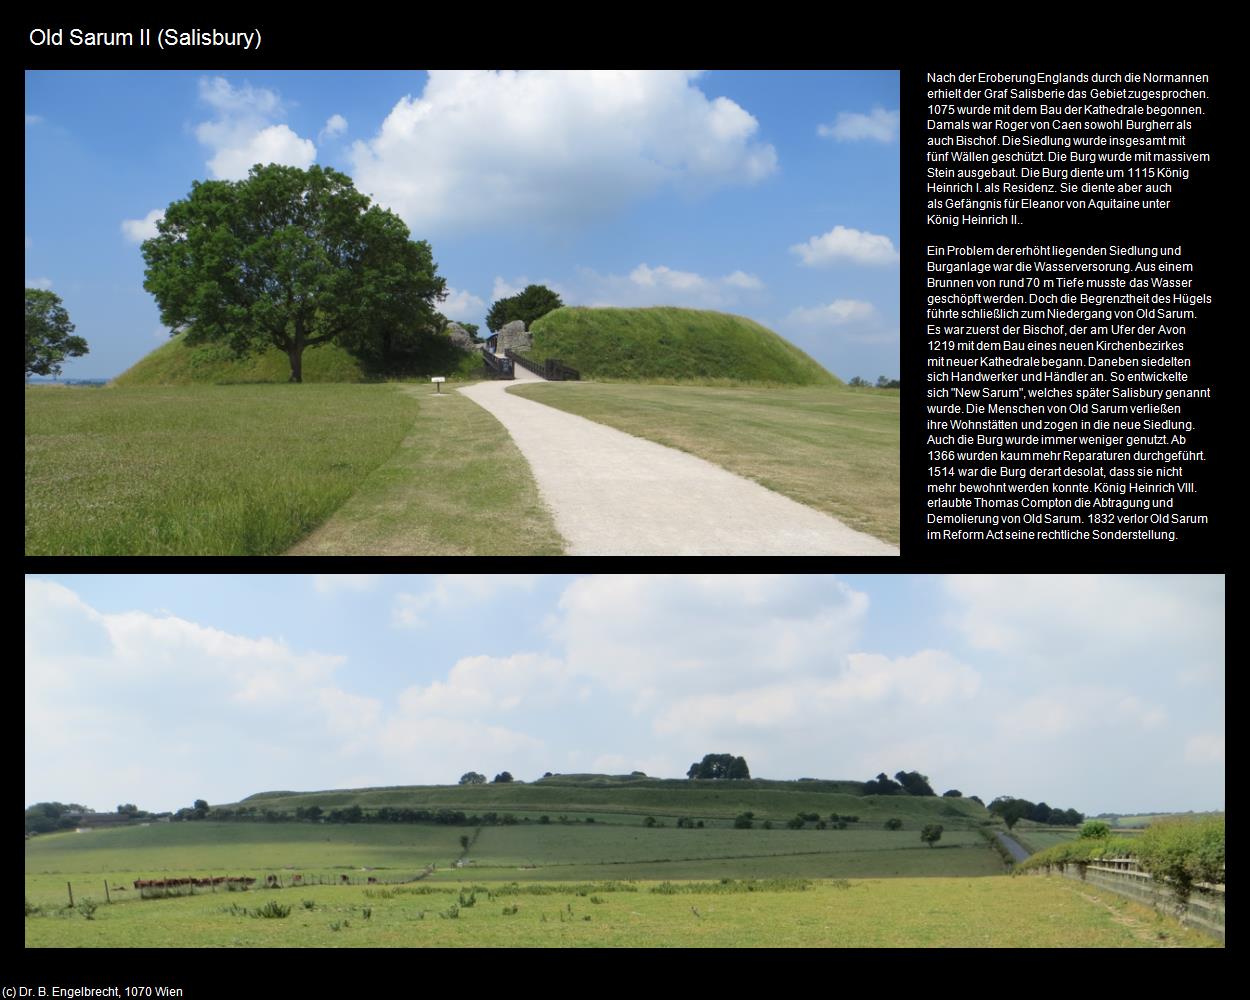 Old Sarum II (Salisbury, England) in Kulturatlas-ENGLAND und WALES